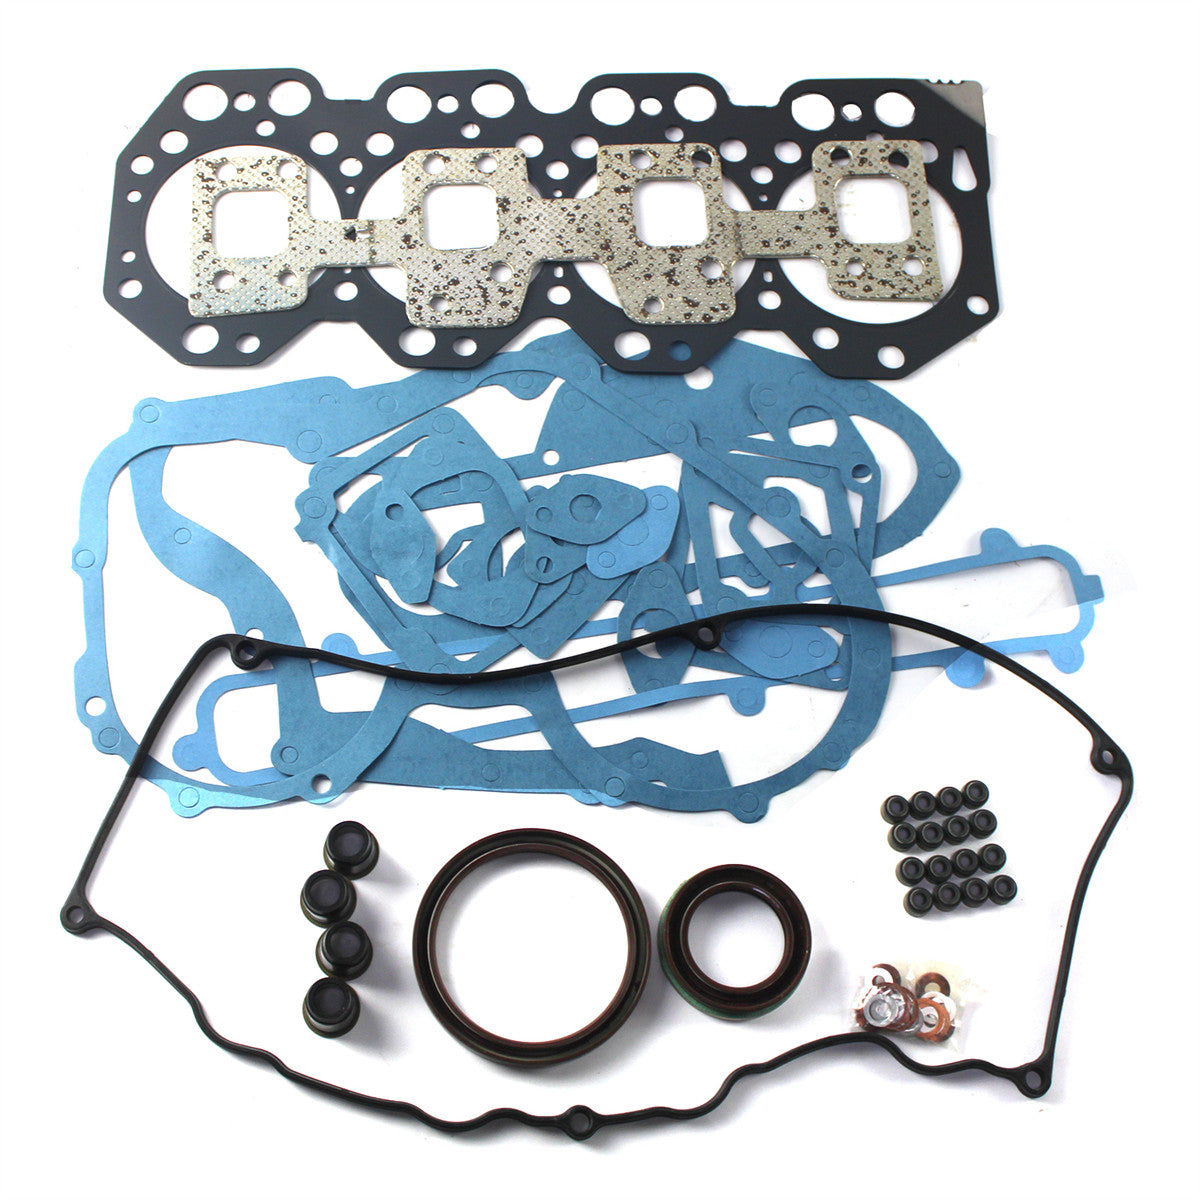 15B 4.1L Disel Engine Gasket Kit for Toyota Coaster BB50 Dyna BU340 - Sinocmp